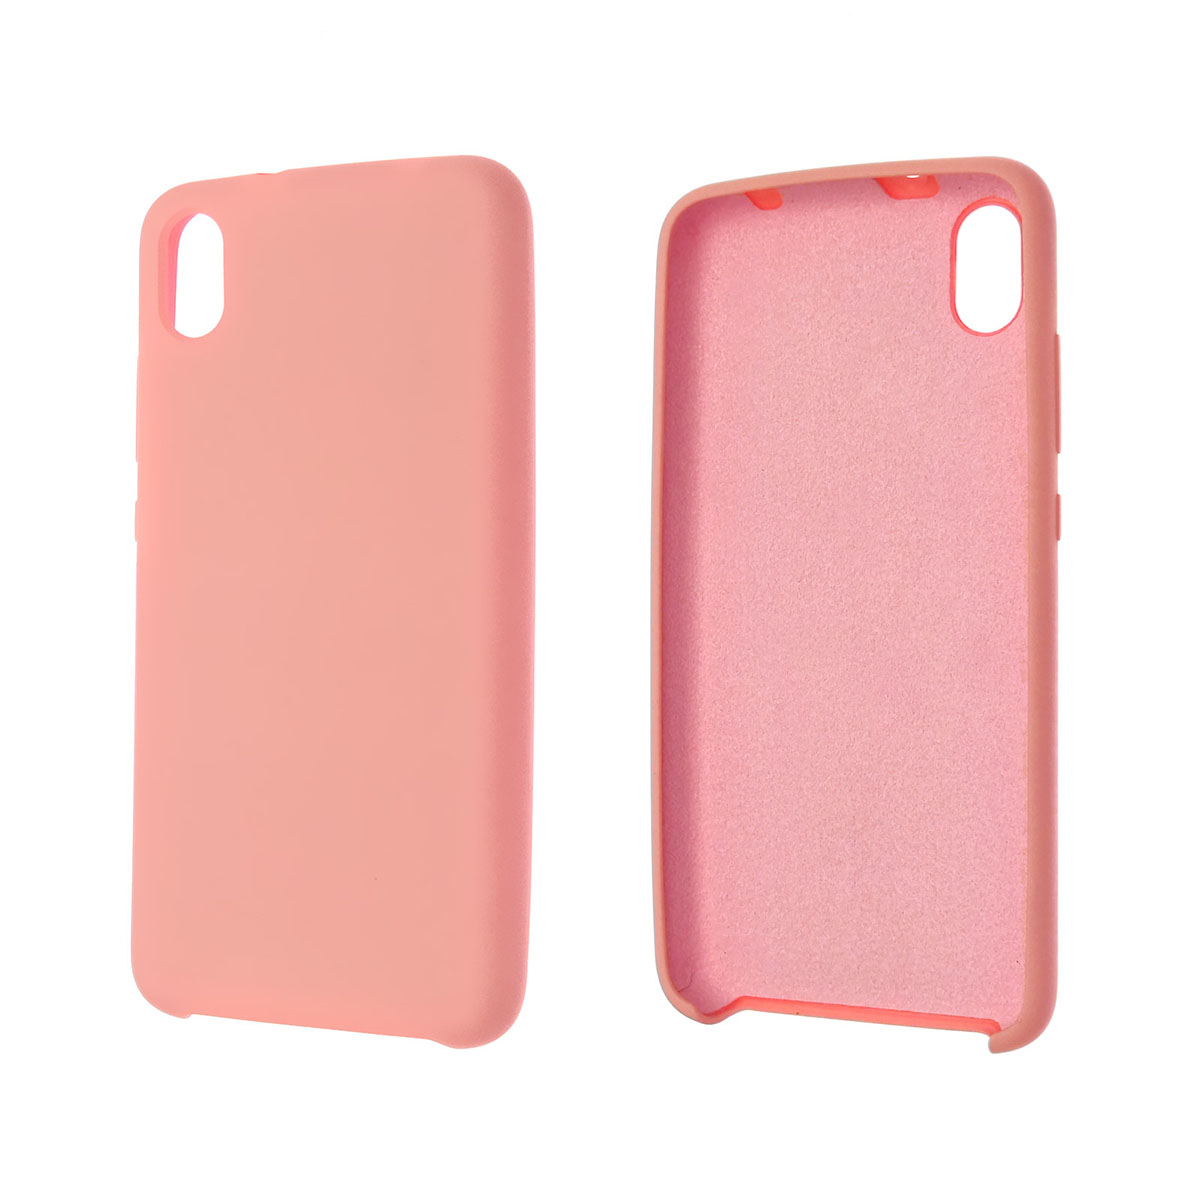 Чехол накладка Silicon Cover для XIAOMI Redmi 7A, силикон, бархат, цвет розовый.